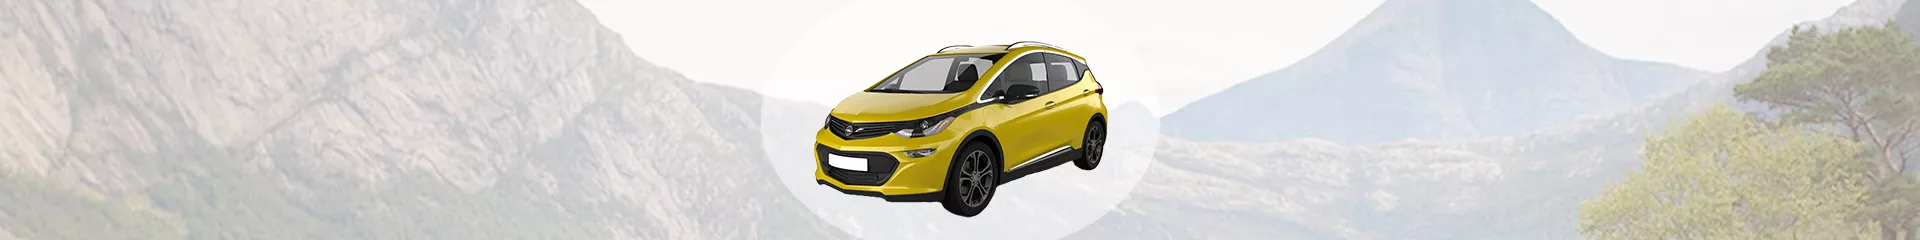 Koop Opel dakdragers voordelig online dakdragerland.nl